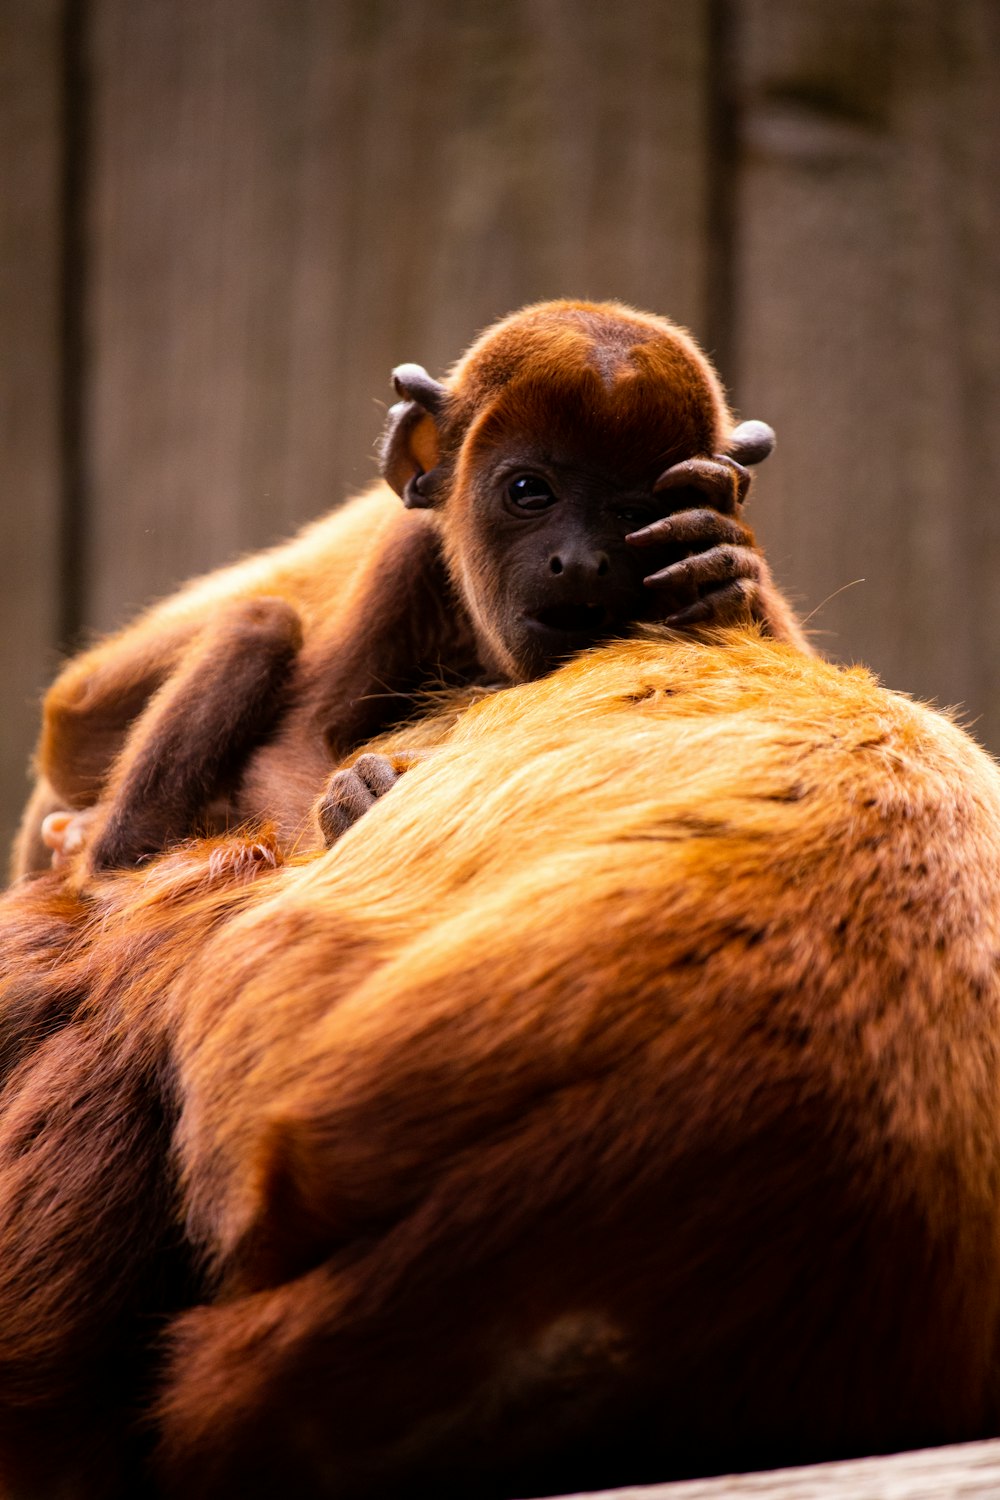 a baby monkey holding onto a larger monkey